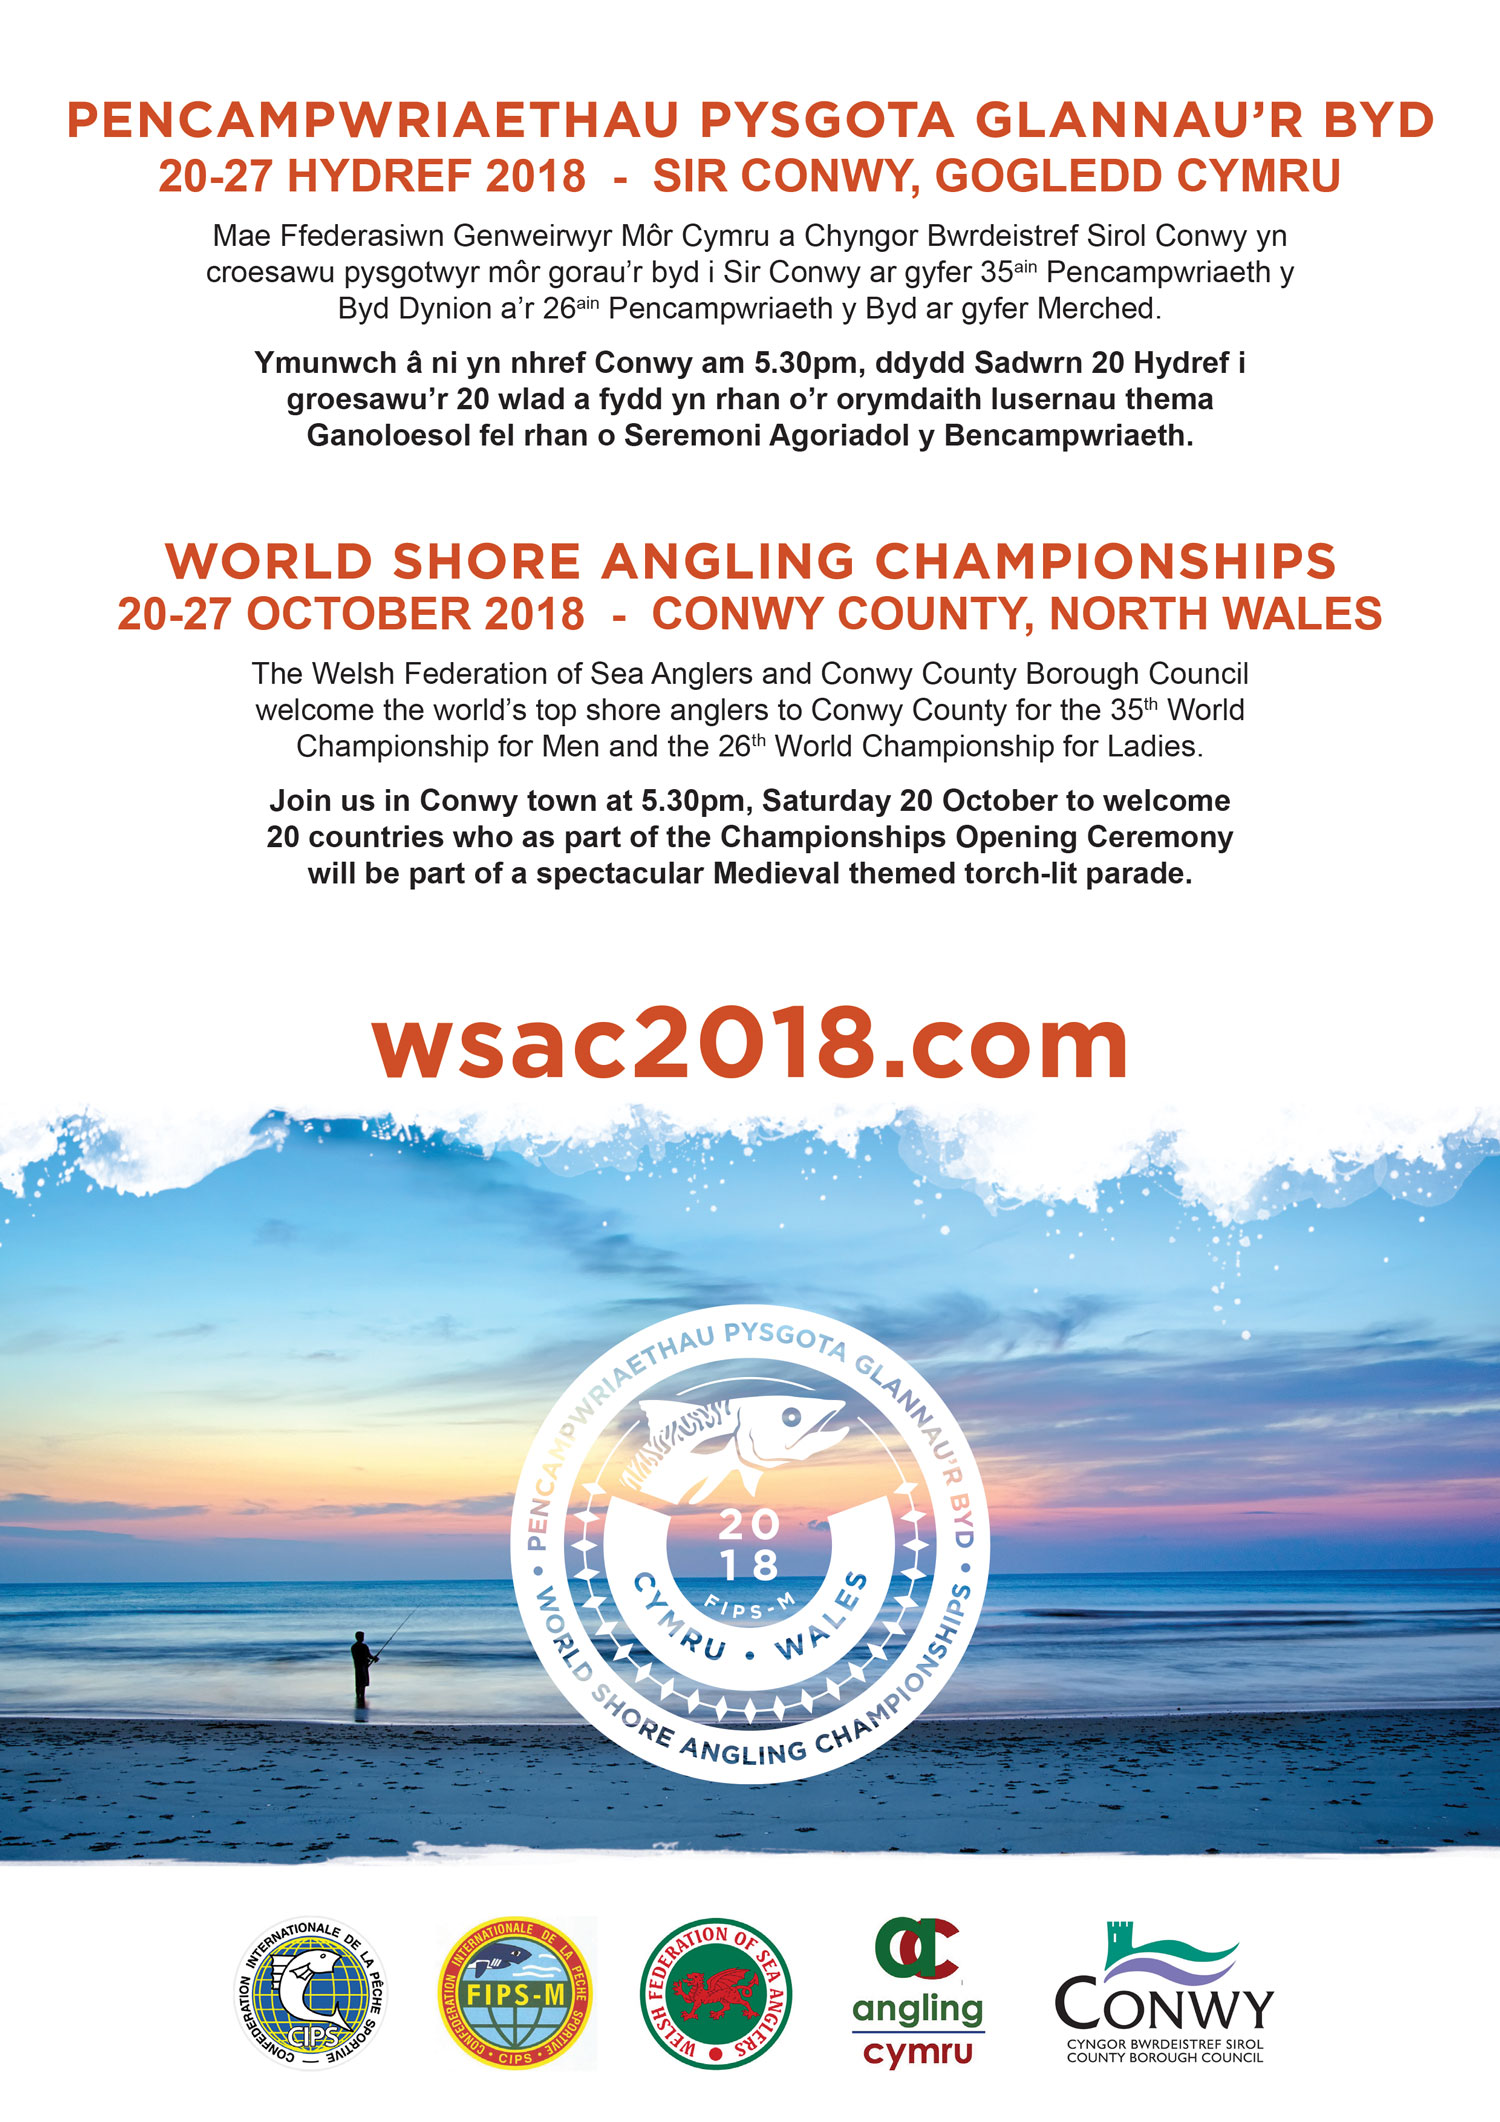 World shore angling championships